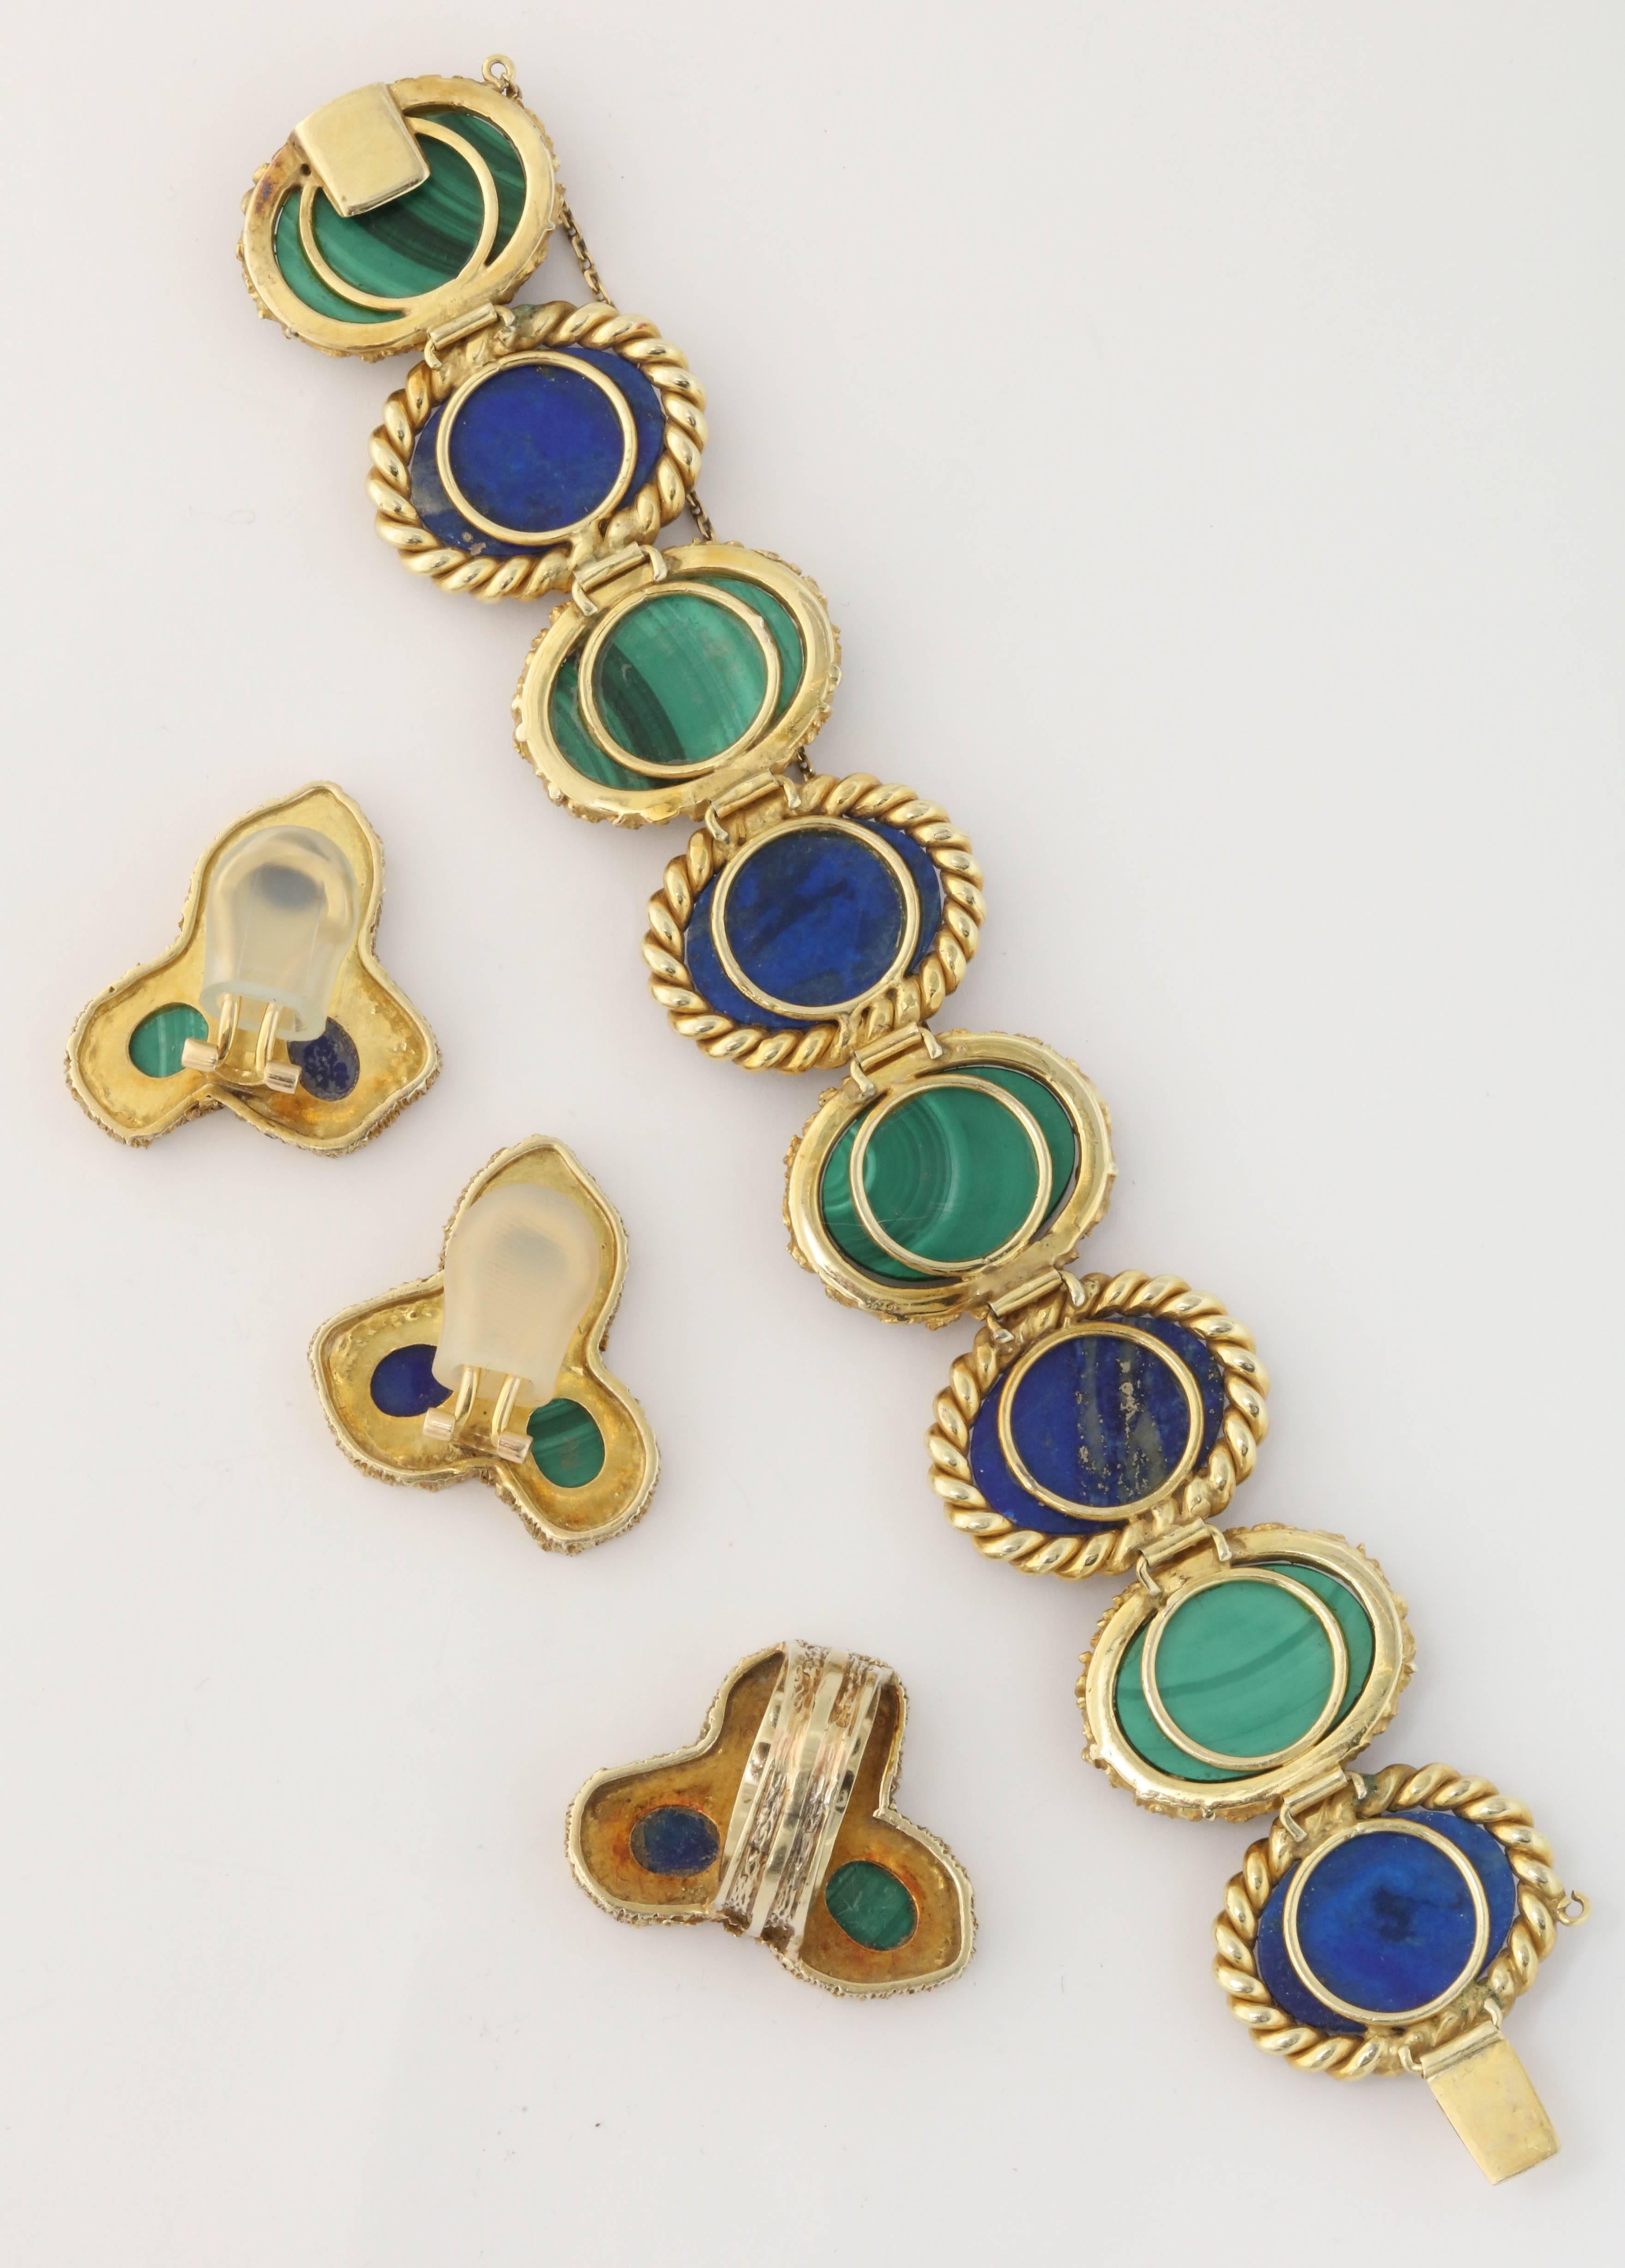 1960s High Quality Oval Cut Lapis Lazuli And Malachite Flexible Link Bracelet For Sale 4